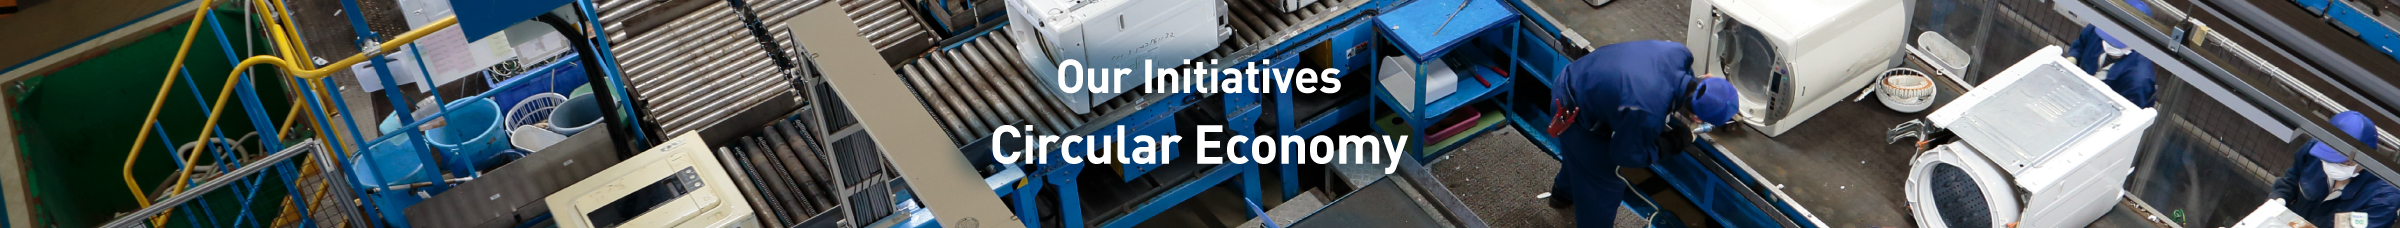 Our Initiatives: Circular Economy